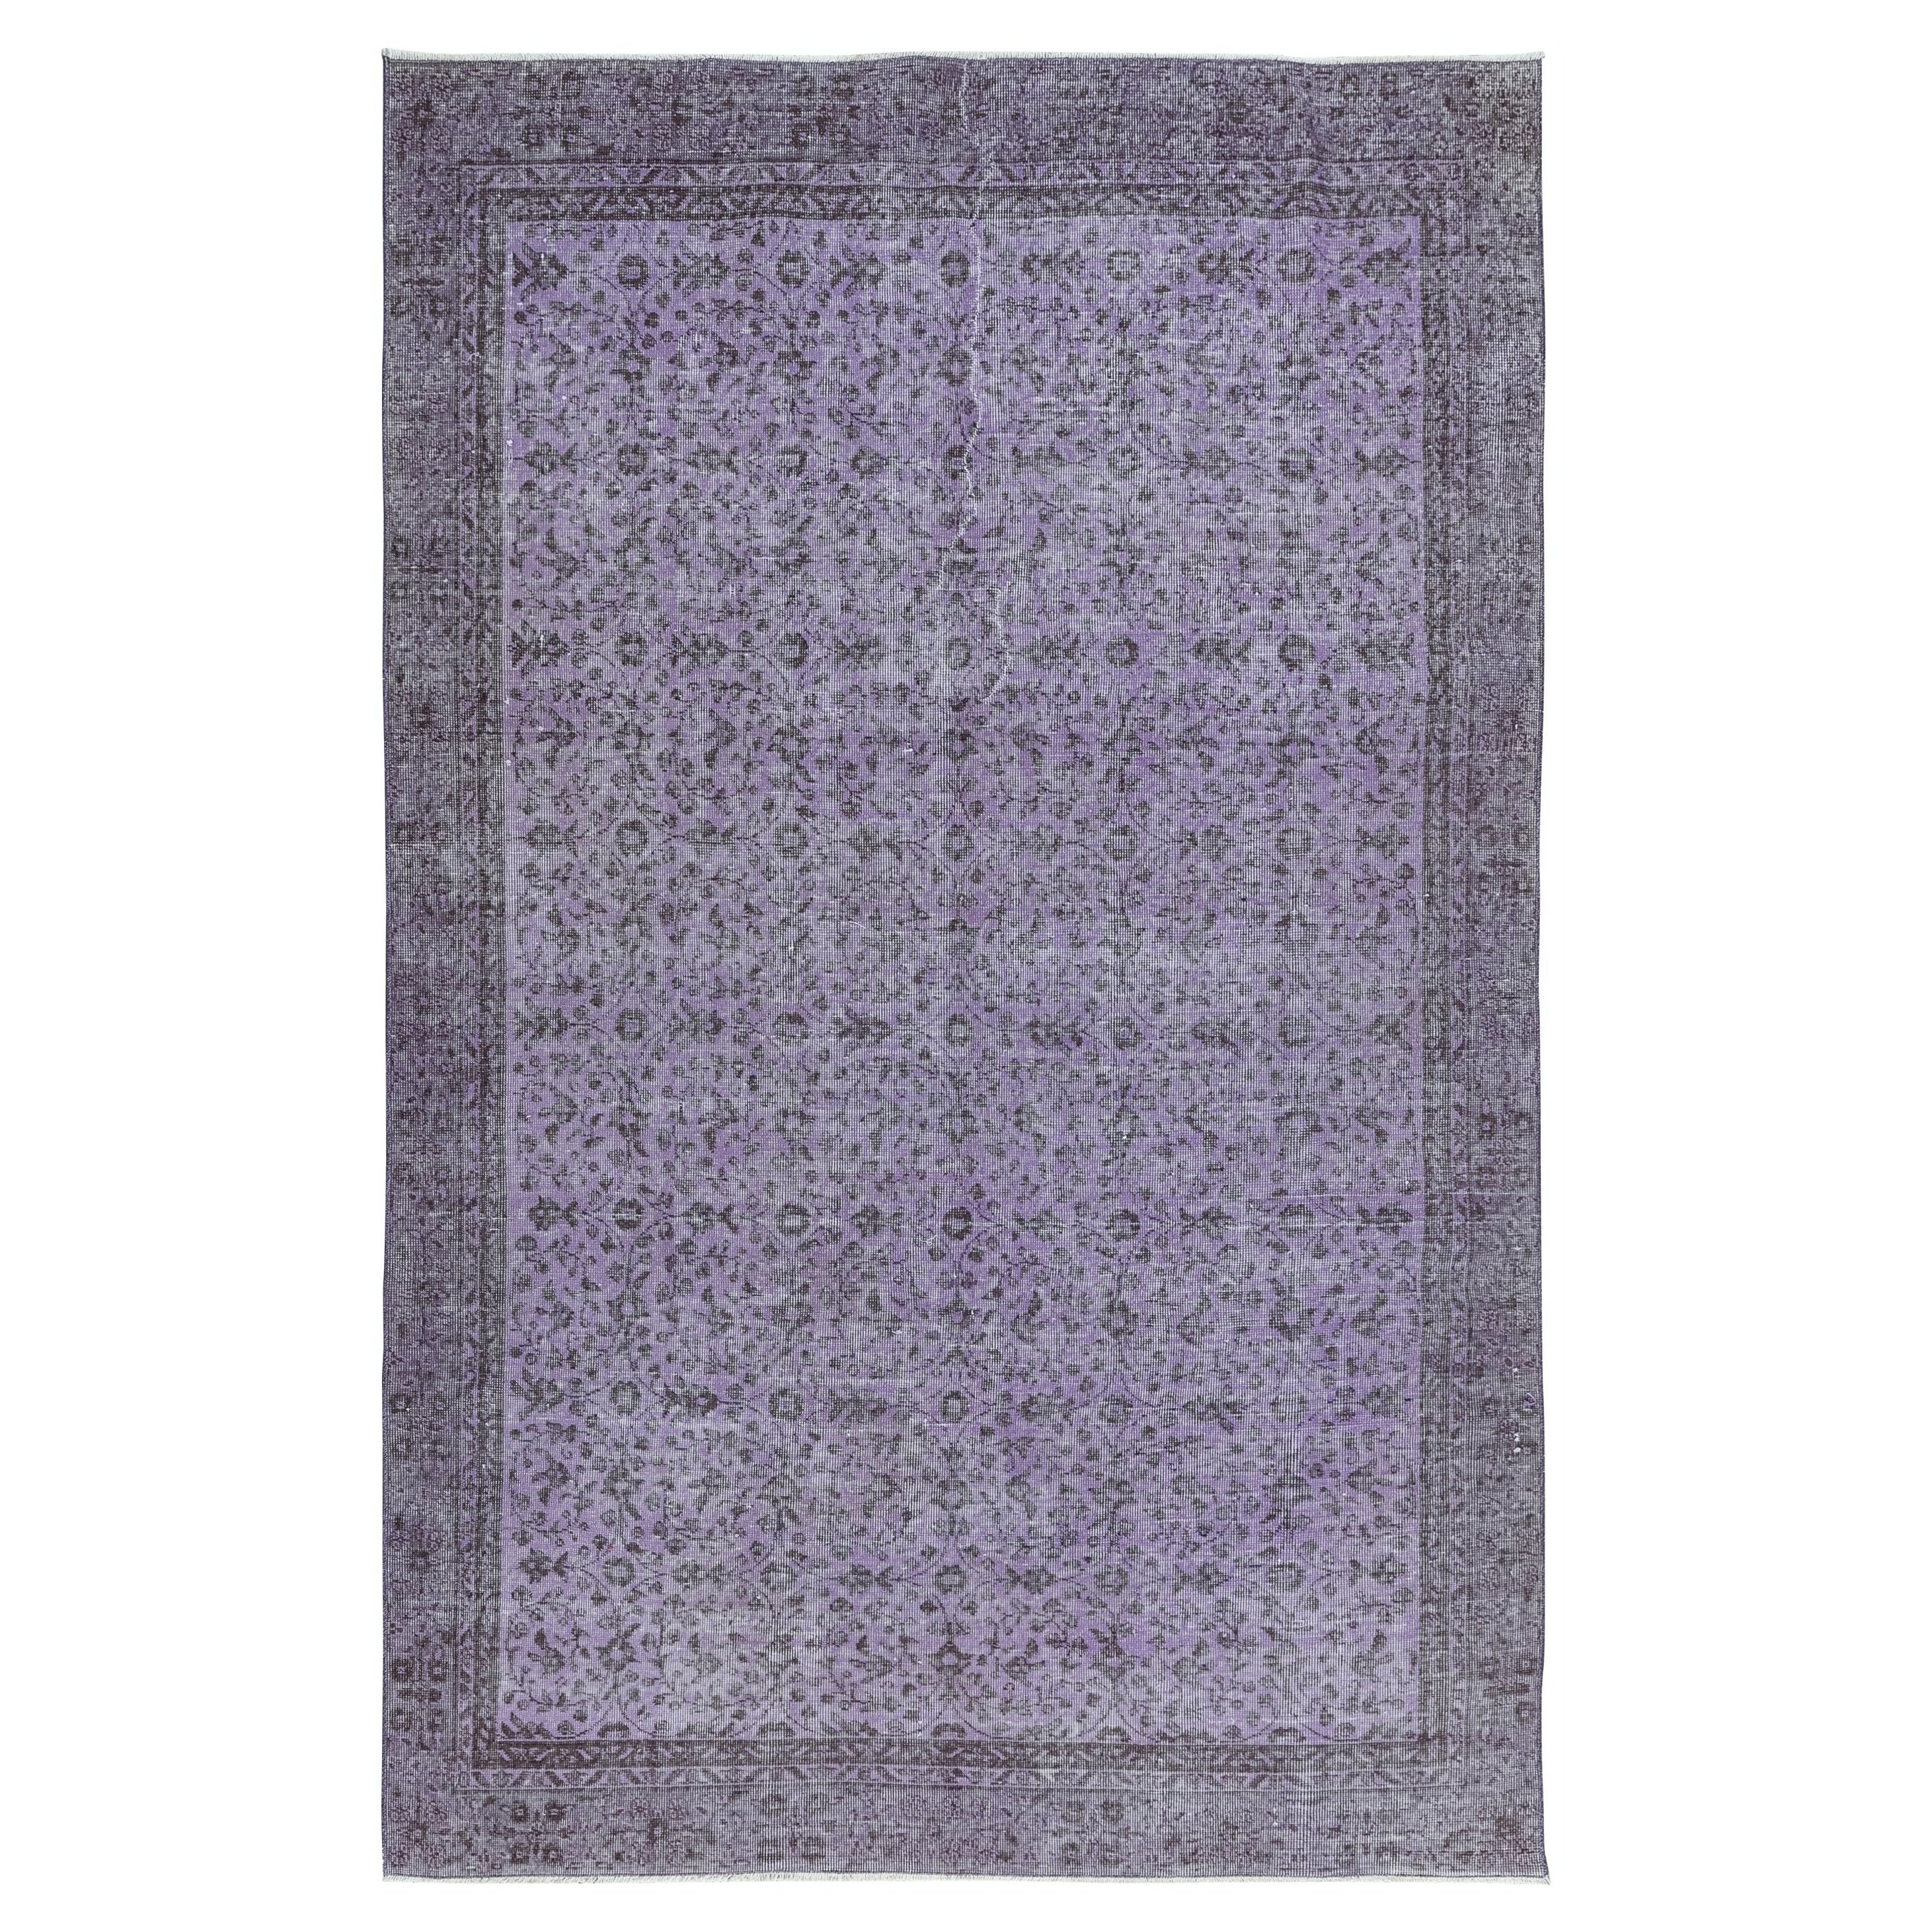 5.8x9.3 Ft Handmade Turkish Rug, Modern Orchid Purple Carpet, Bohem Home Decor For Sale